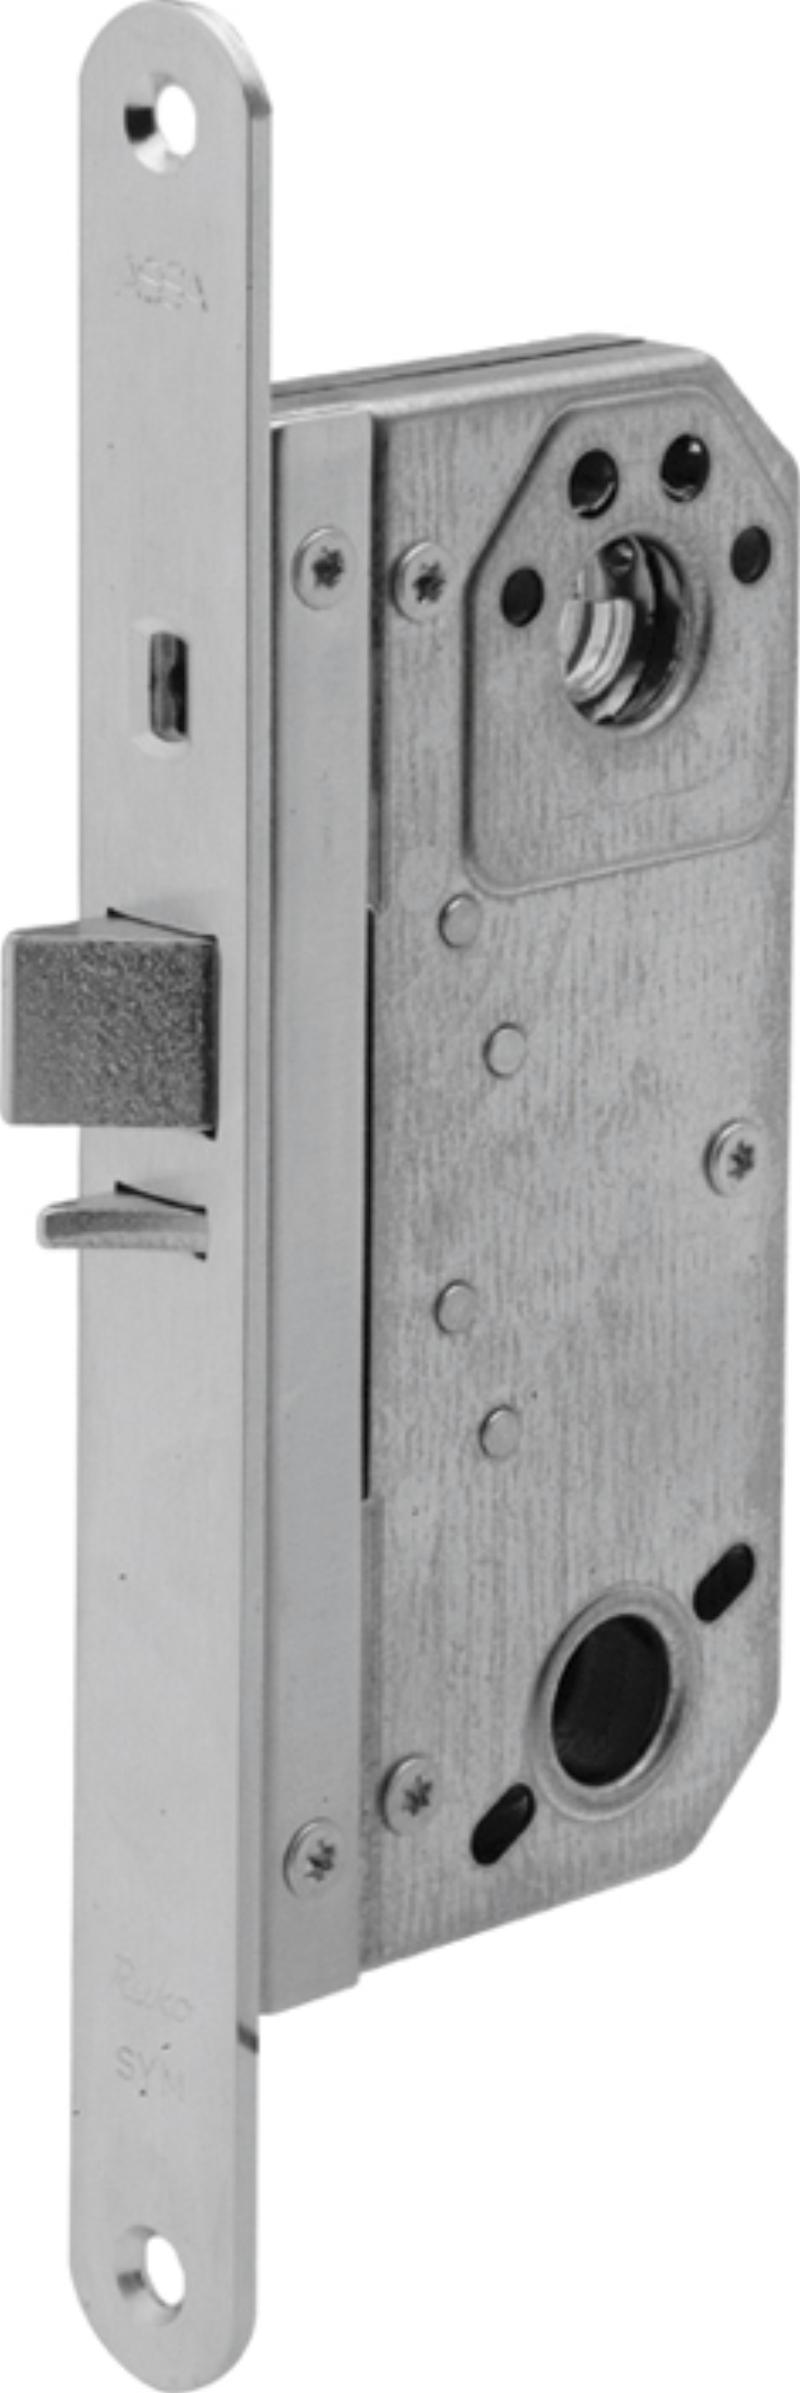 Assa lock case 5585 u/tin